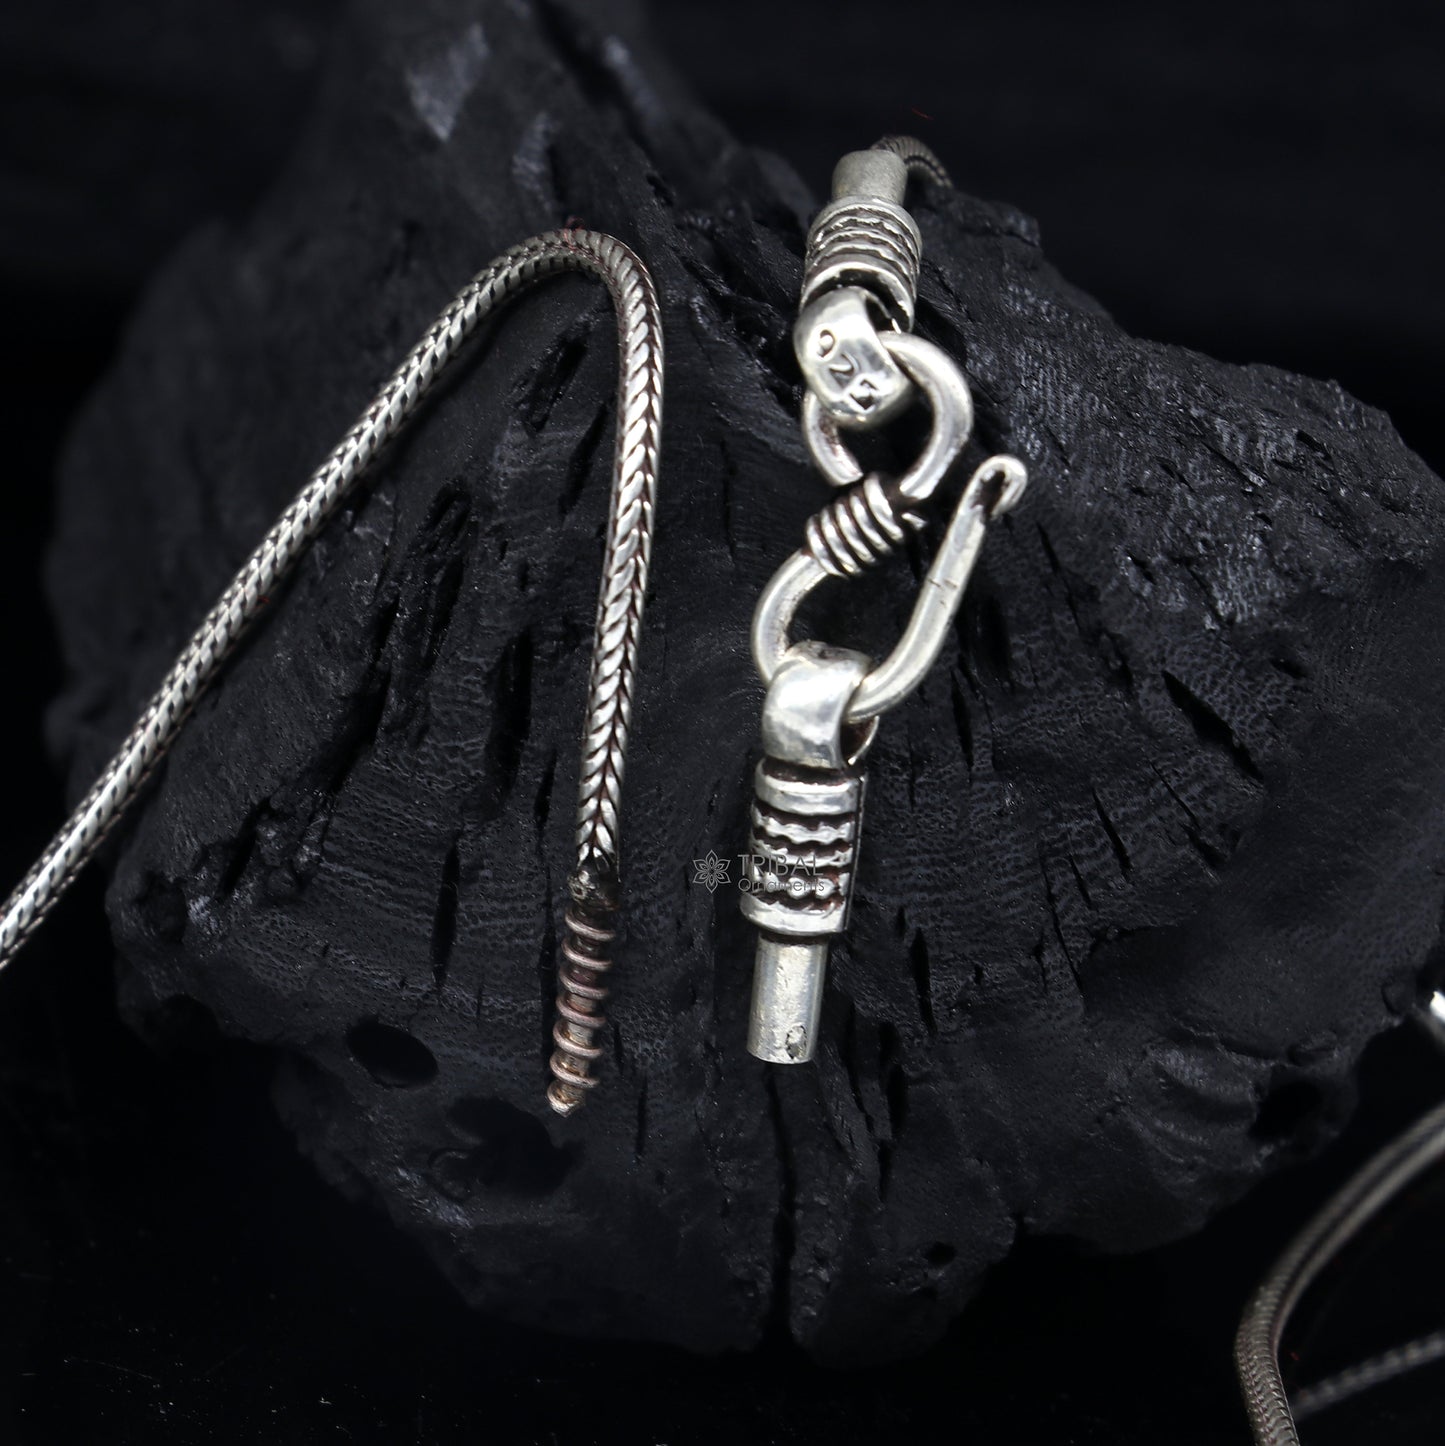 925 pure silver Silver Heaven Ba gua Symbol design pendant, wheat chain necklace locket best gifting delicate unisex  jewelry nsp736 - TRIBAL ORNAMENTS